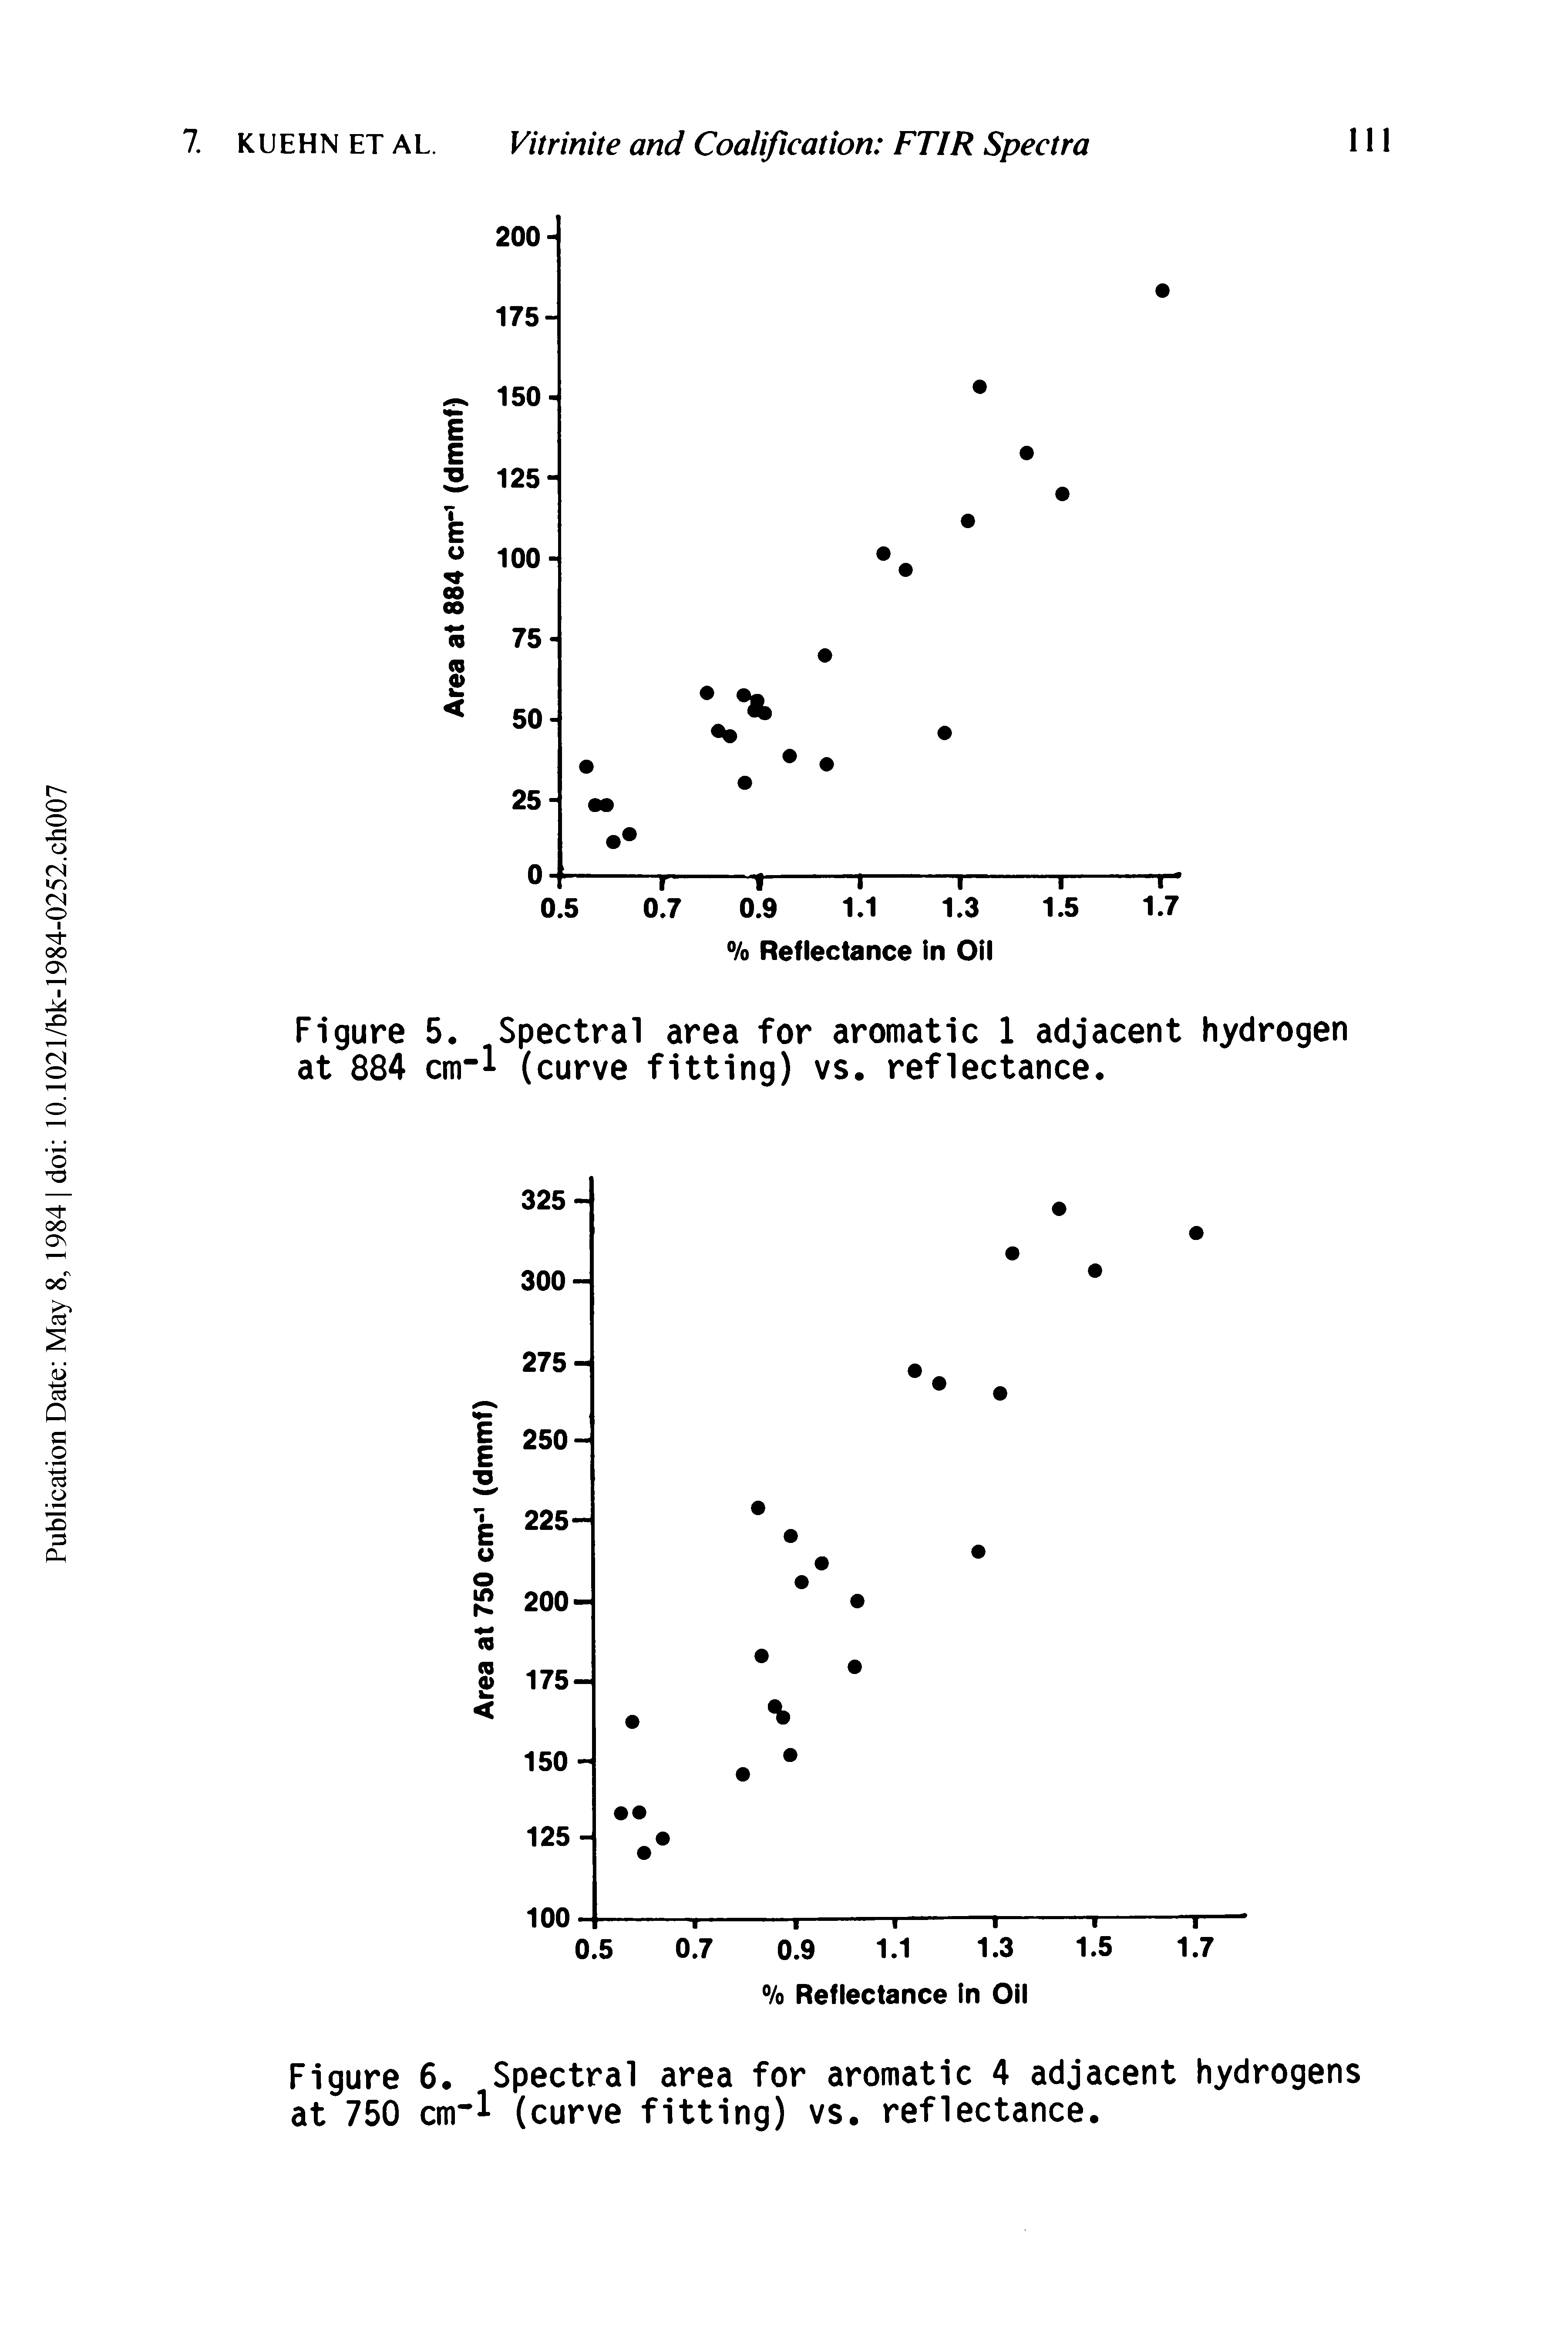 Figure 5. Spectral area for aromatic 1 adjacent hydrogen at 884 crrrl (curve fitting) vs. reflectance.